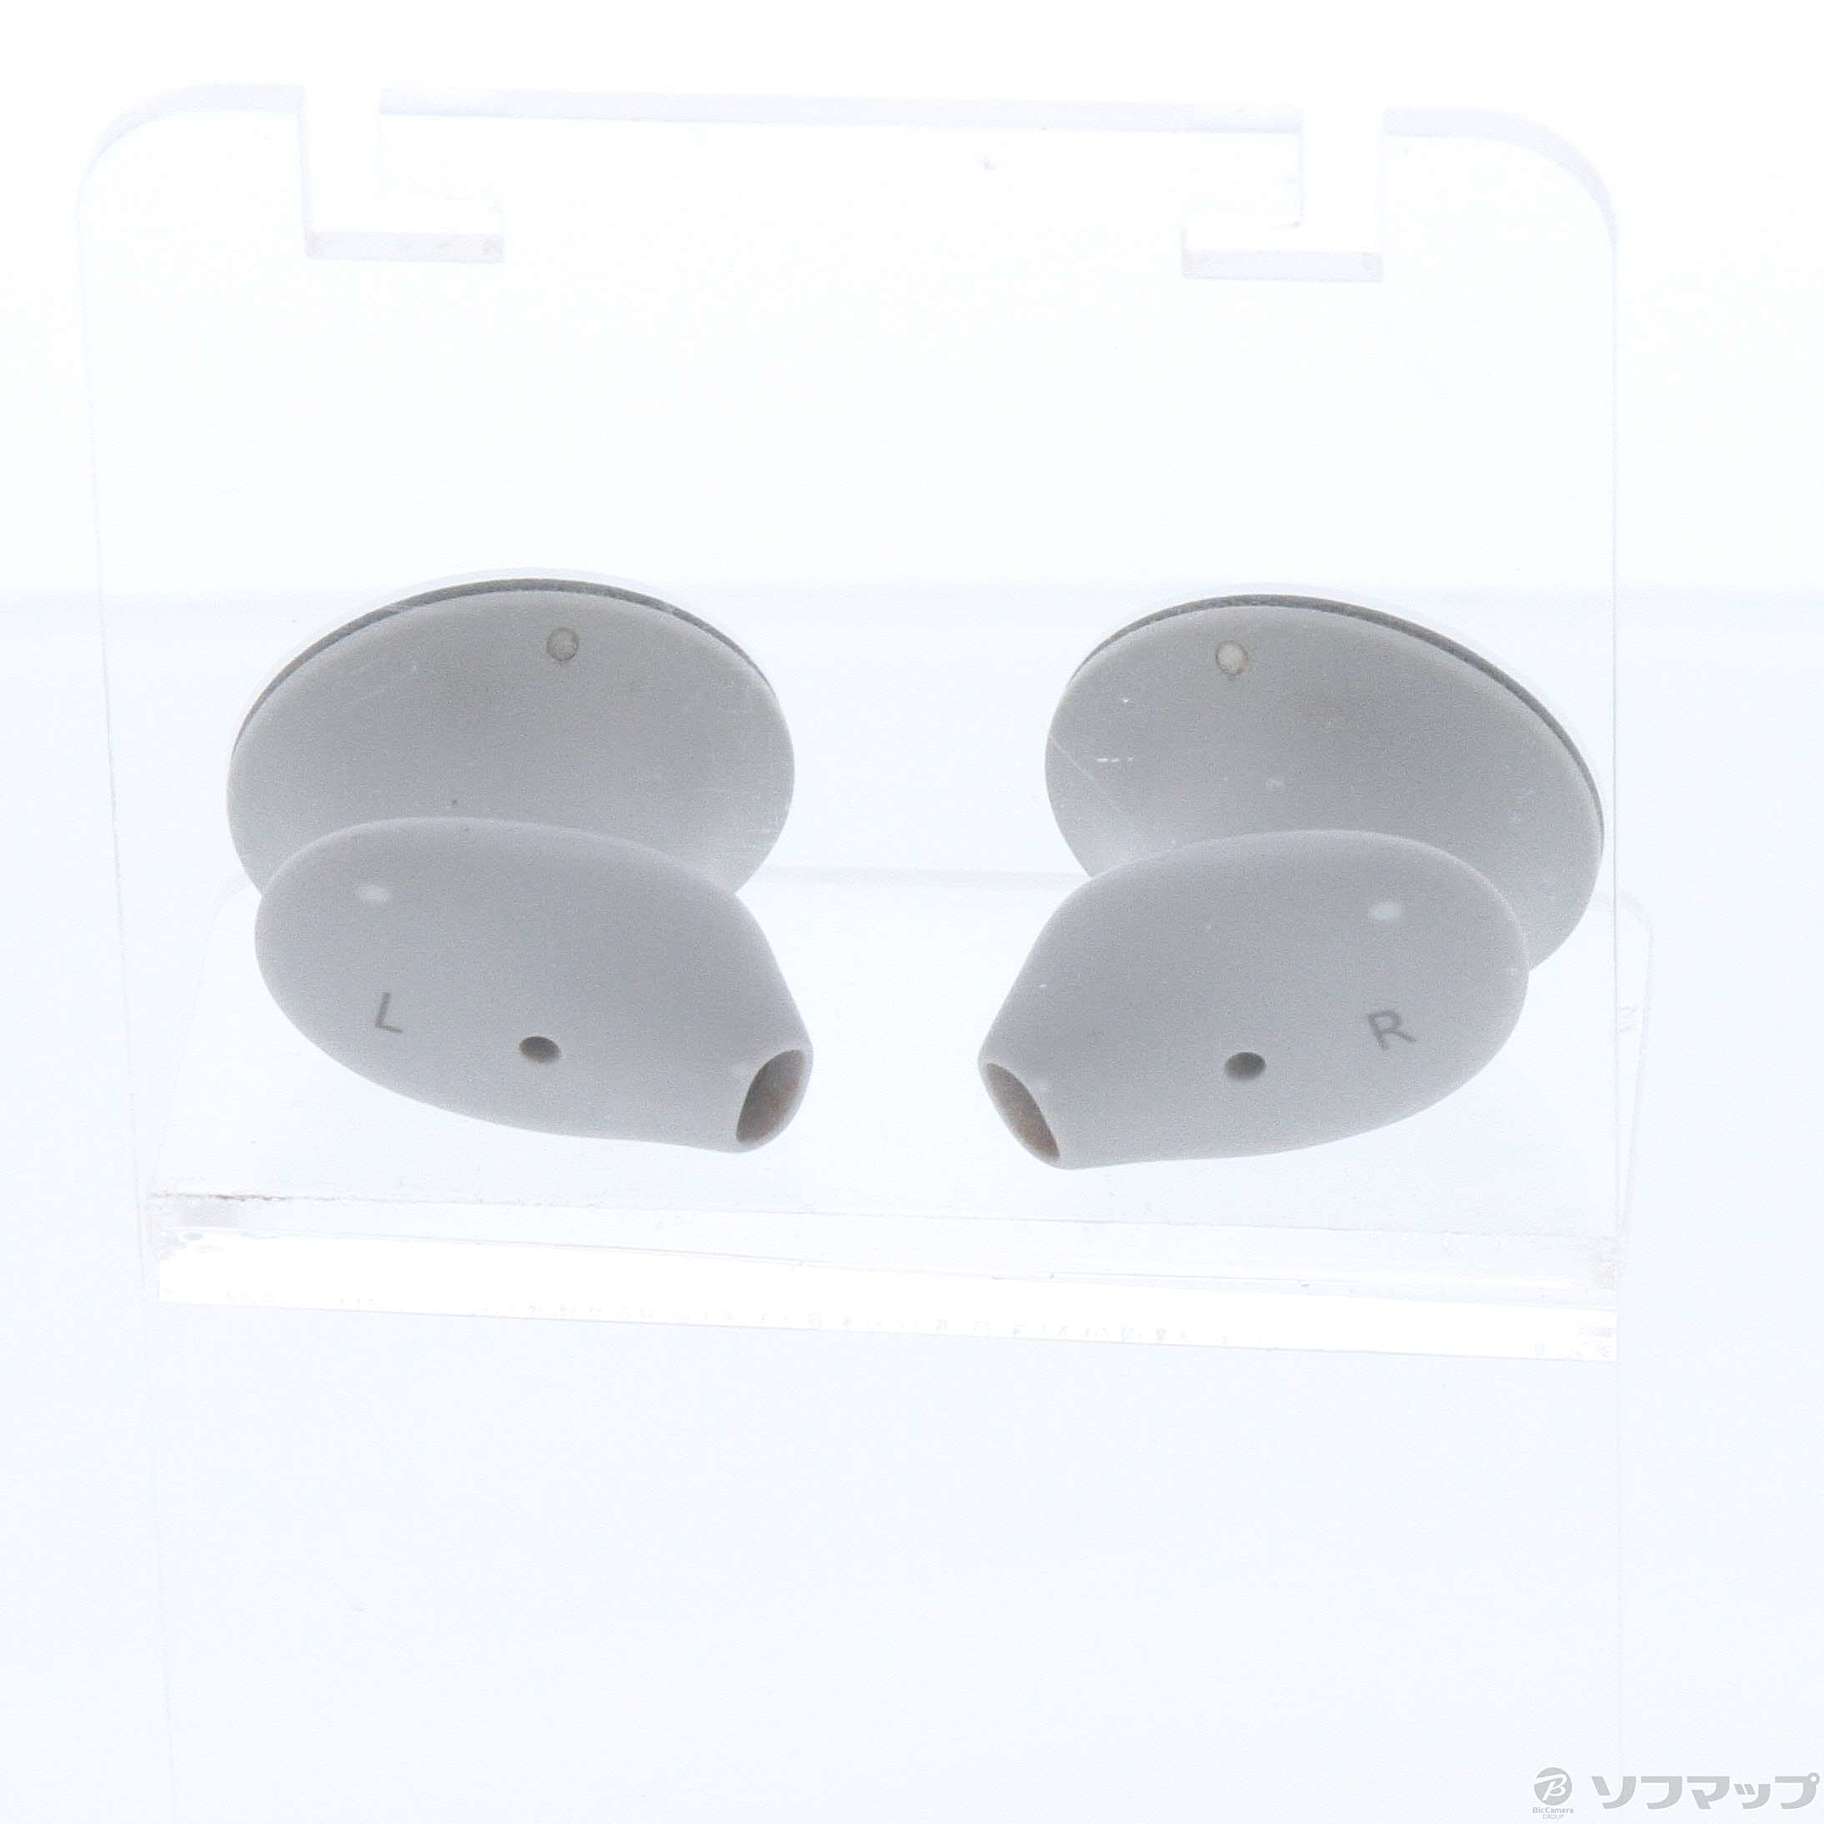 HVM-00005 Surface Earbuds